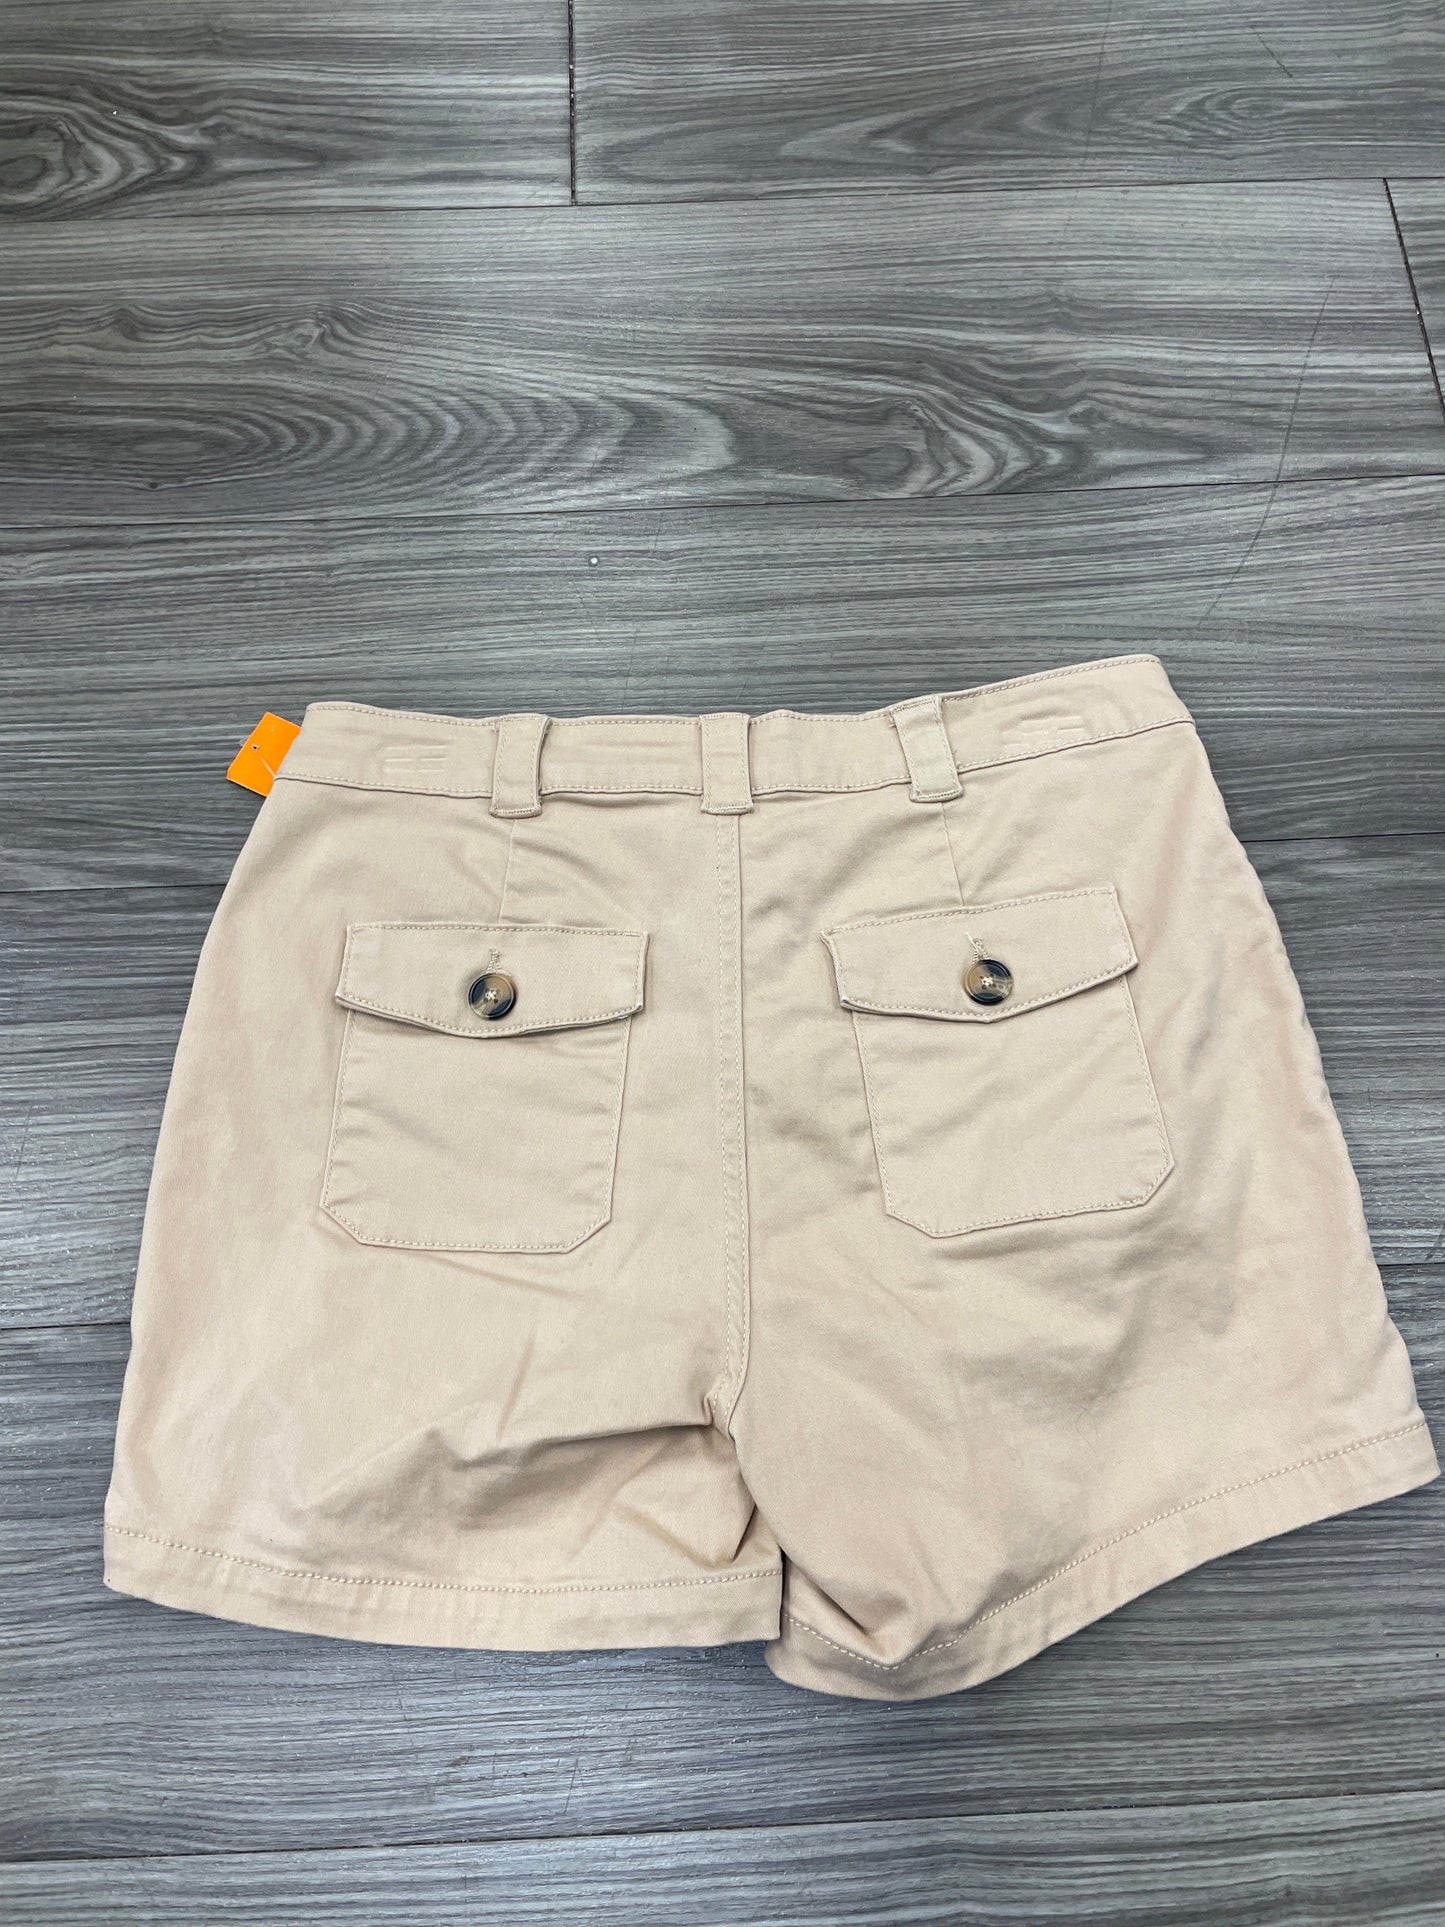 Shorts By Falls Creek  Size: 8